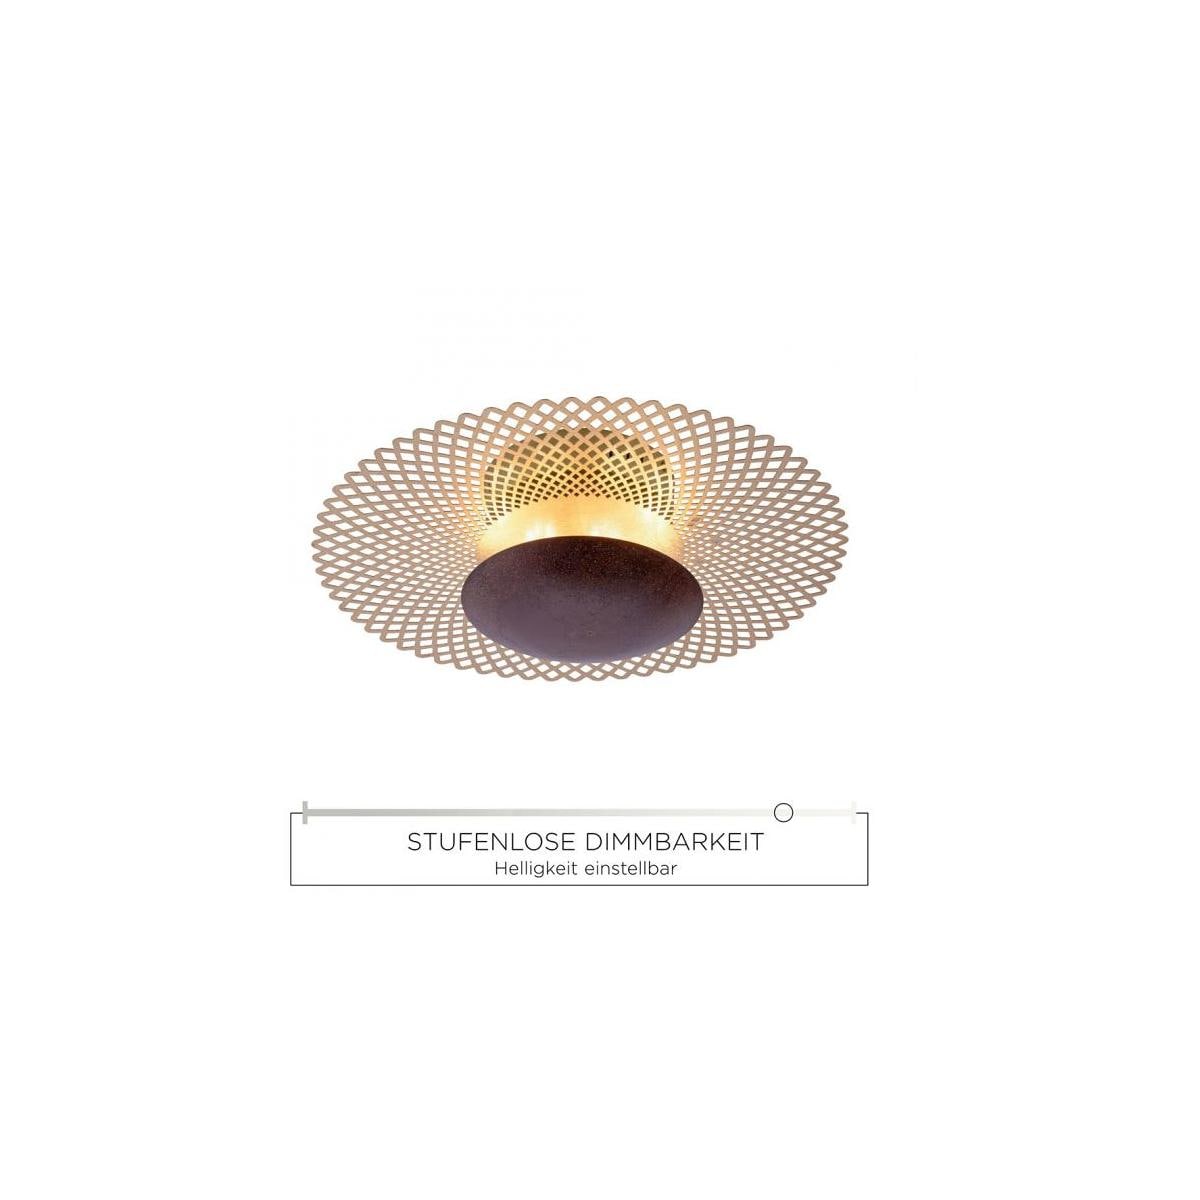 Paul Neuhaus LED Deckenleuchte, rost-gold, indirekt, blendfrei, dimmbar,  Memory Funktion, 18W, 2250lm (6551-48) Elektroshop Wagner